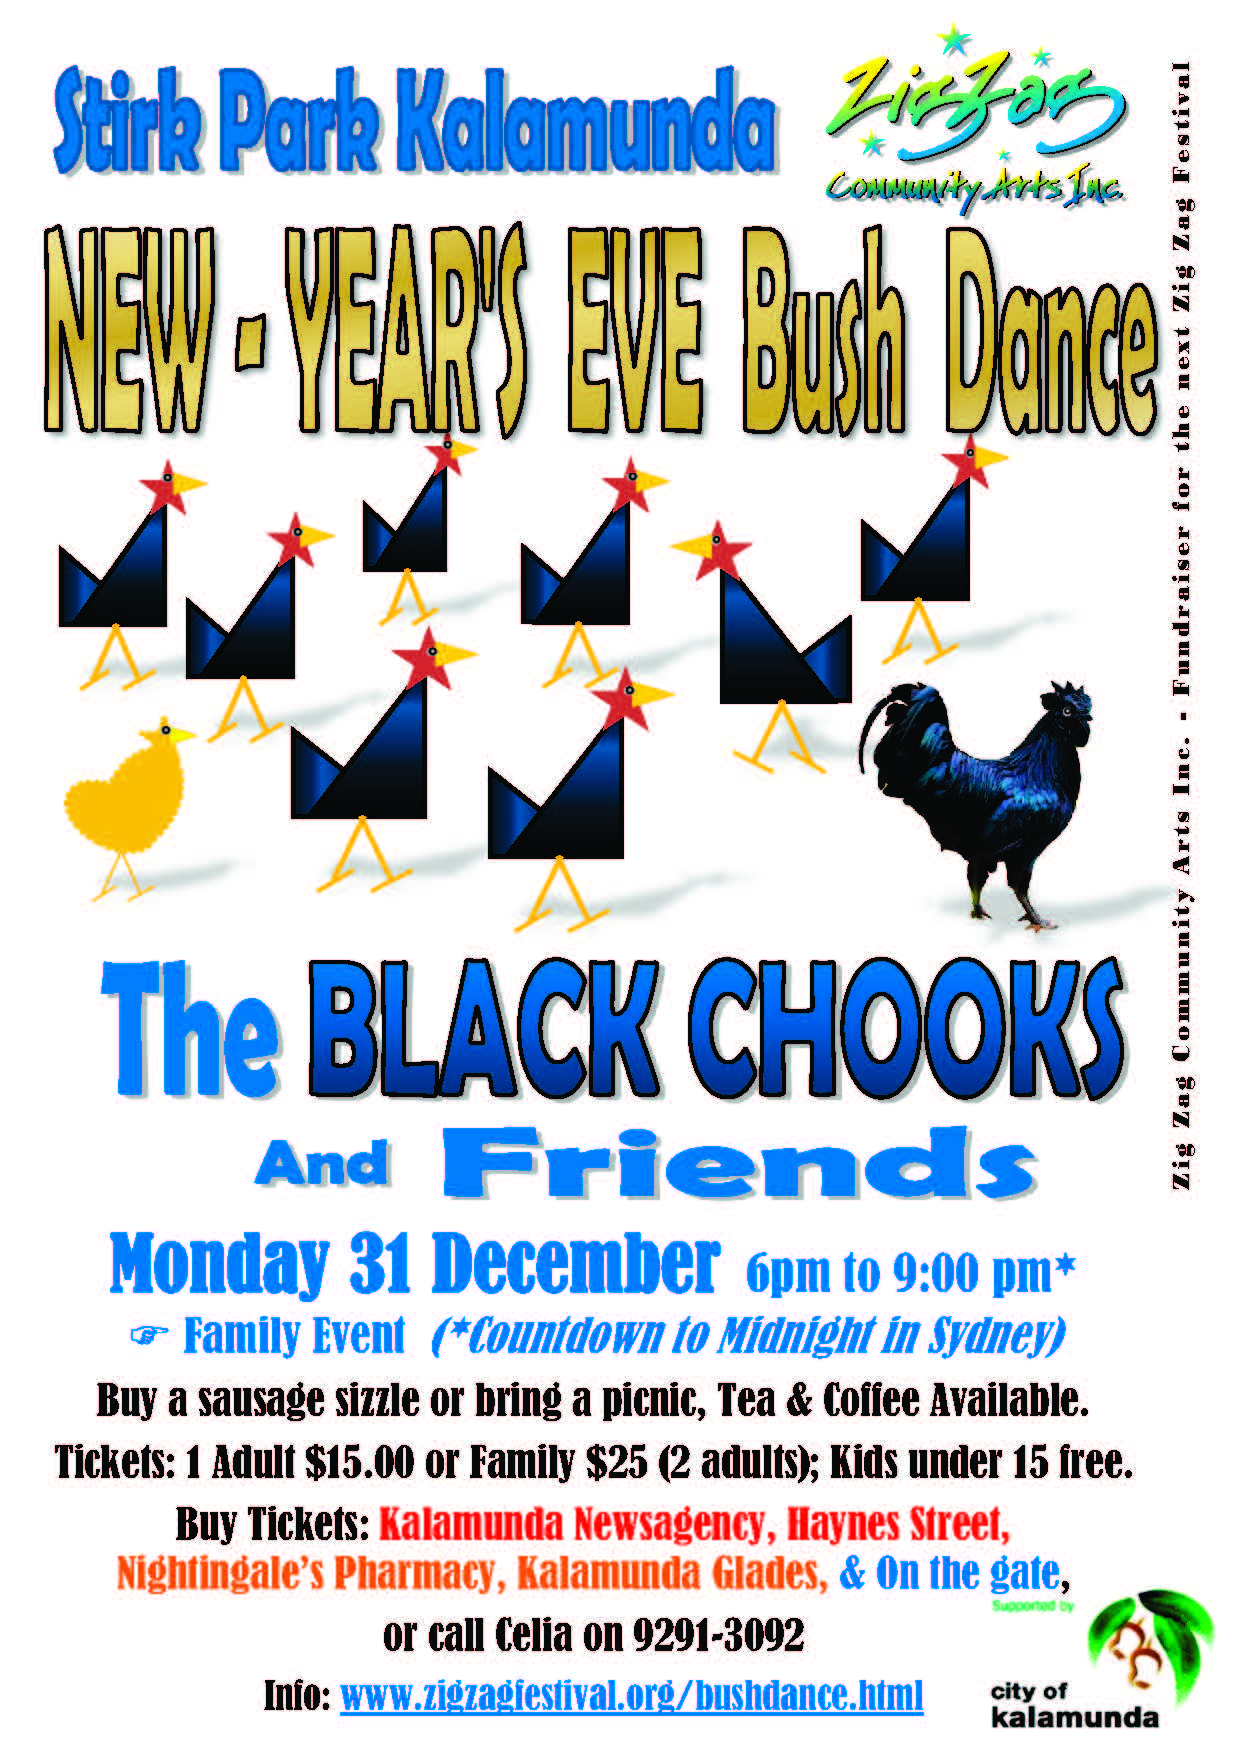 Poster for NYE Bush Dance in Stirk Park with the Black Chooks